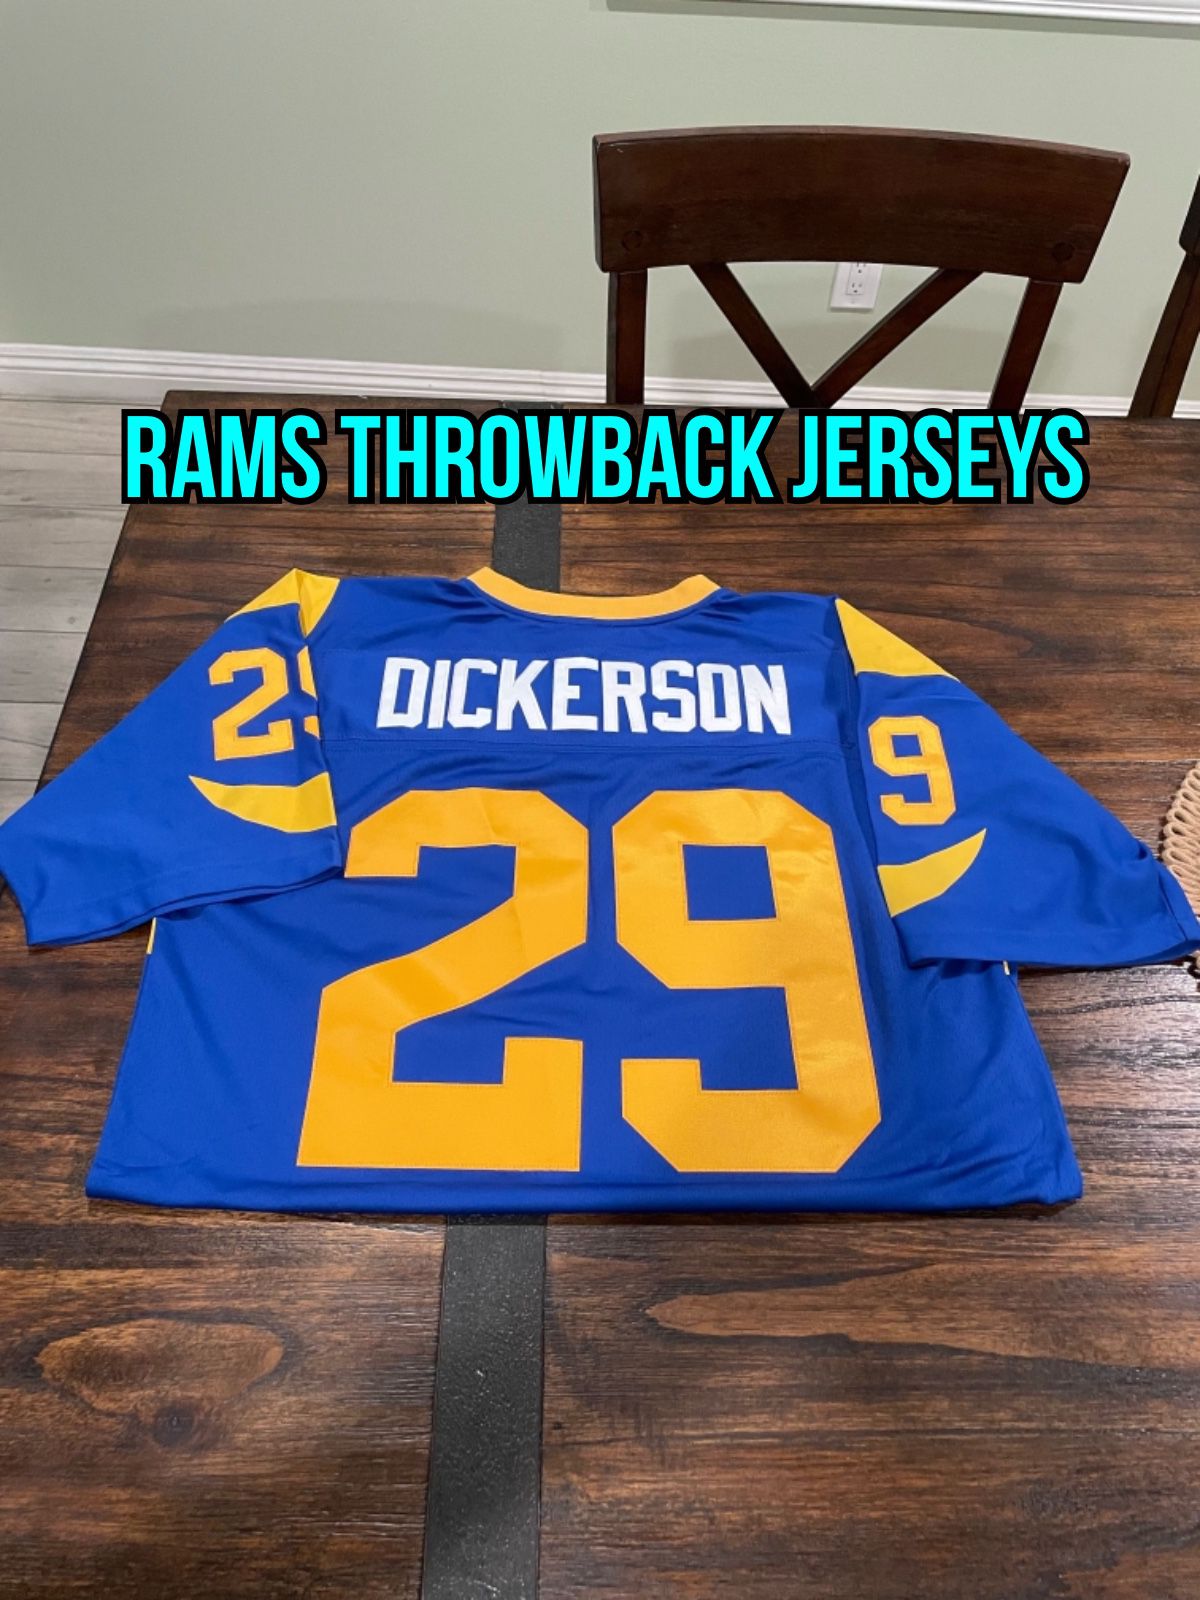 LA Rams Men's Mitchell & Ness 1984 Eric Dickerson #29 Jersey Blue